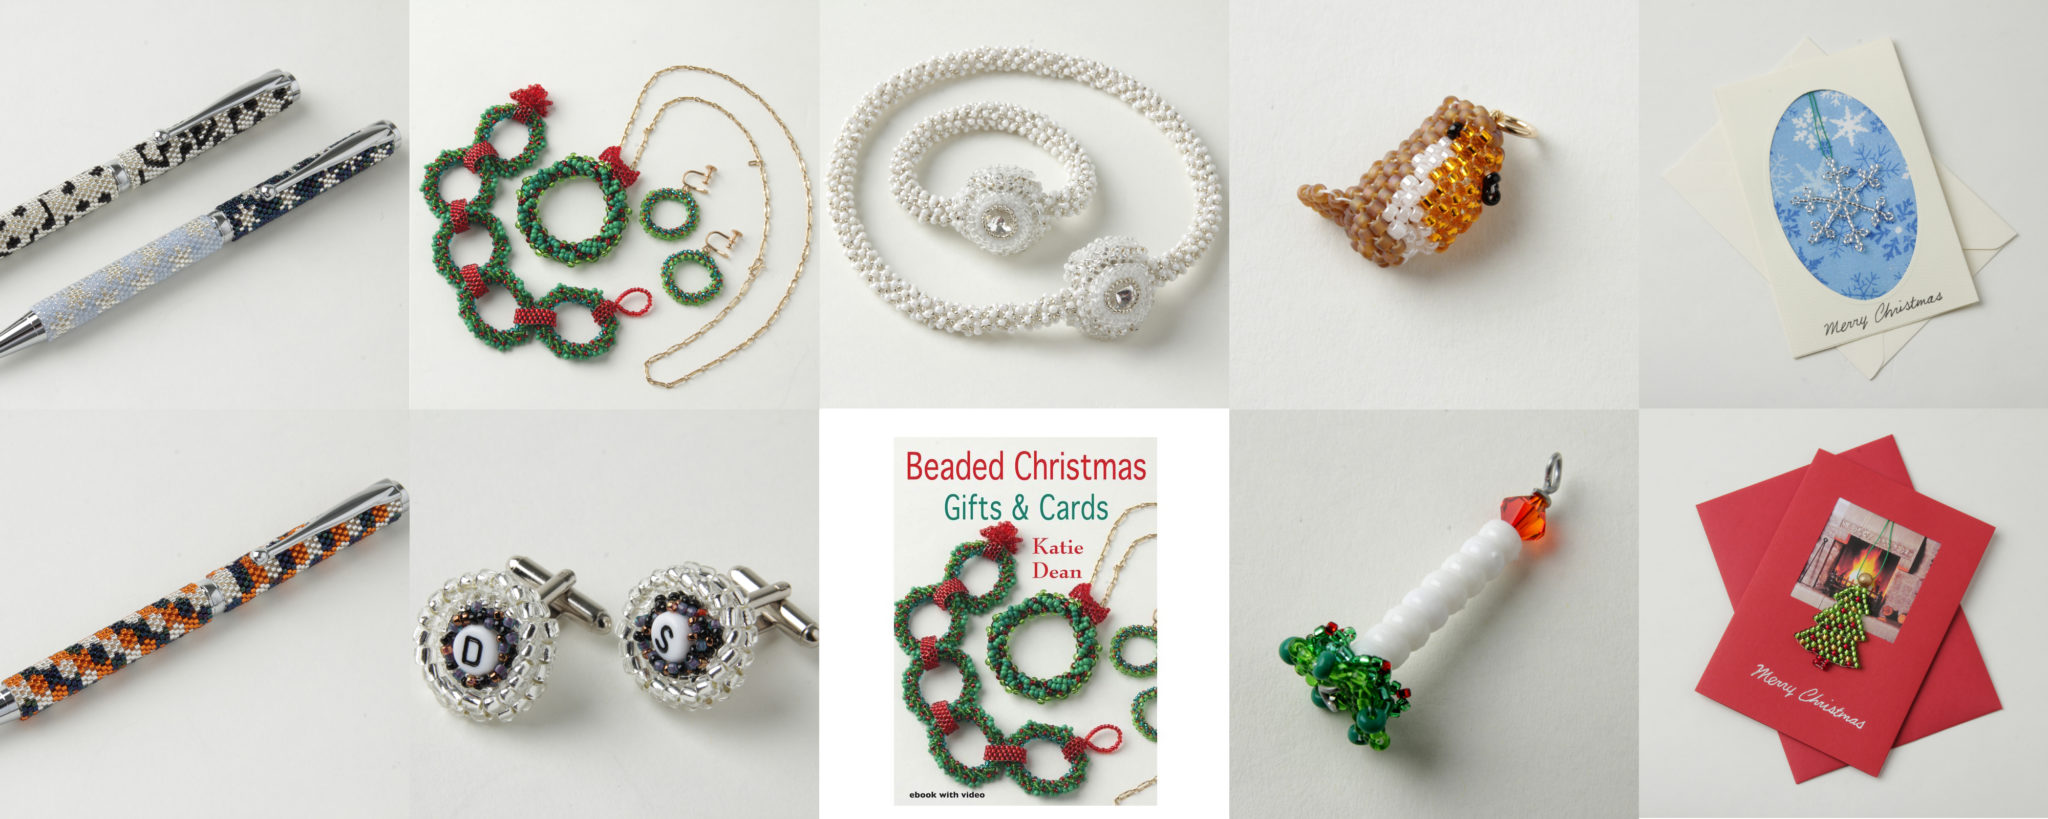 Beaded Christmas Ornament Pattern Books, Katie Dean, Beadflowers